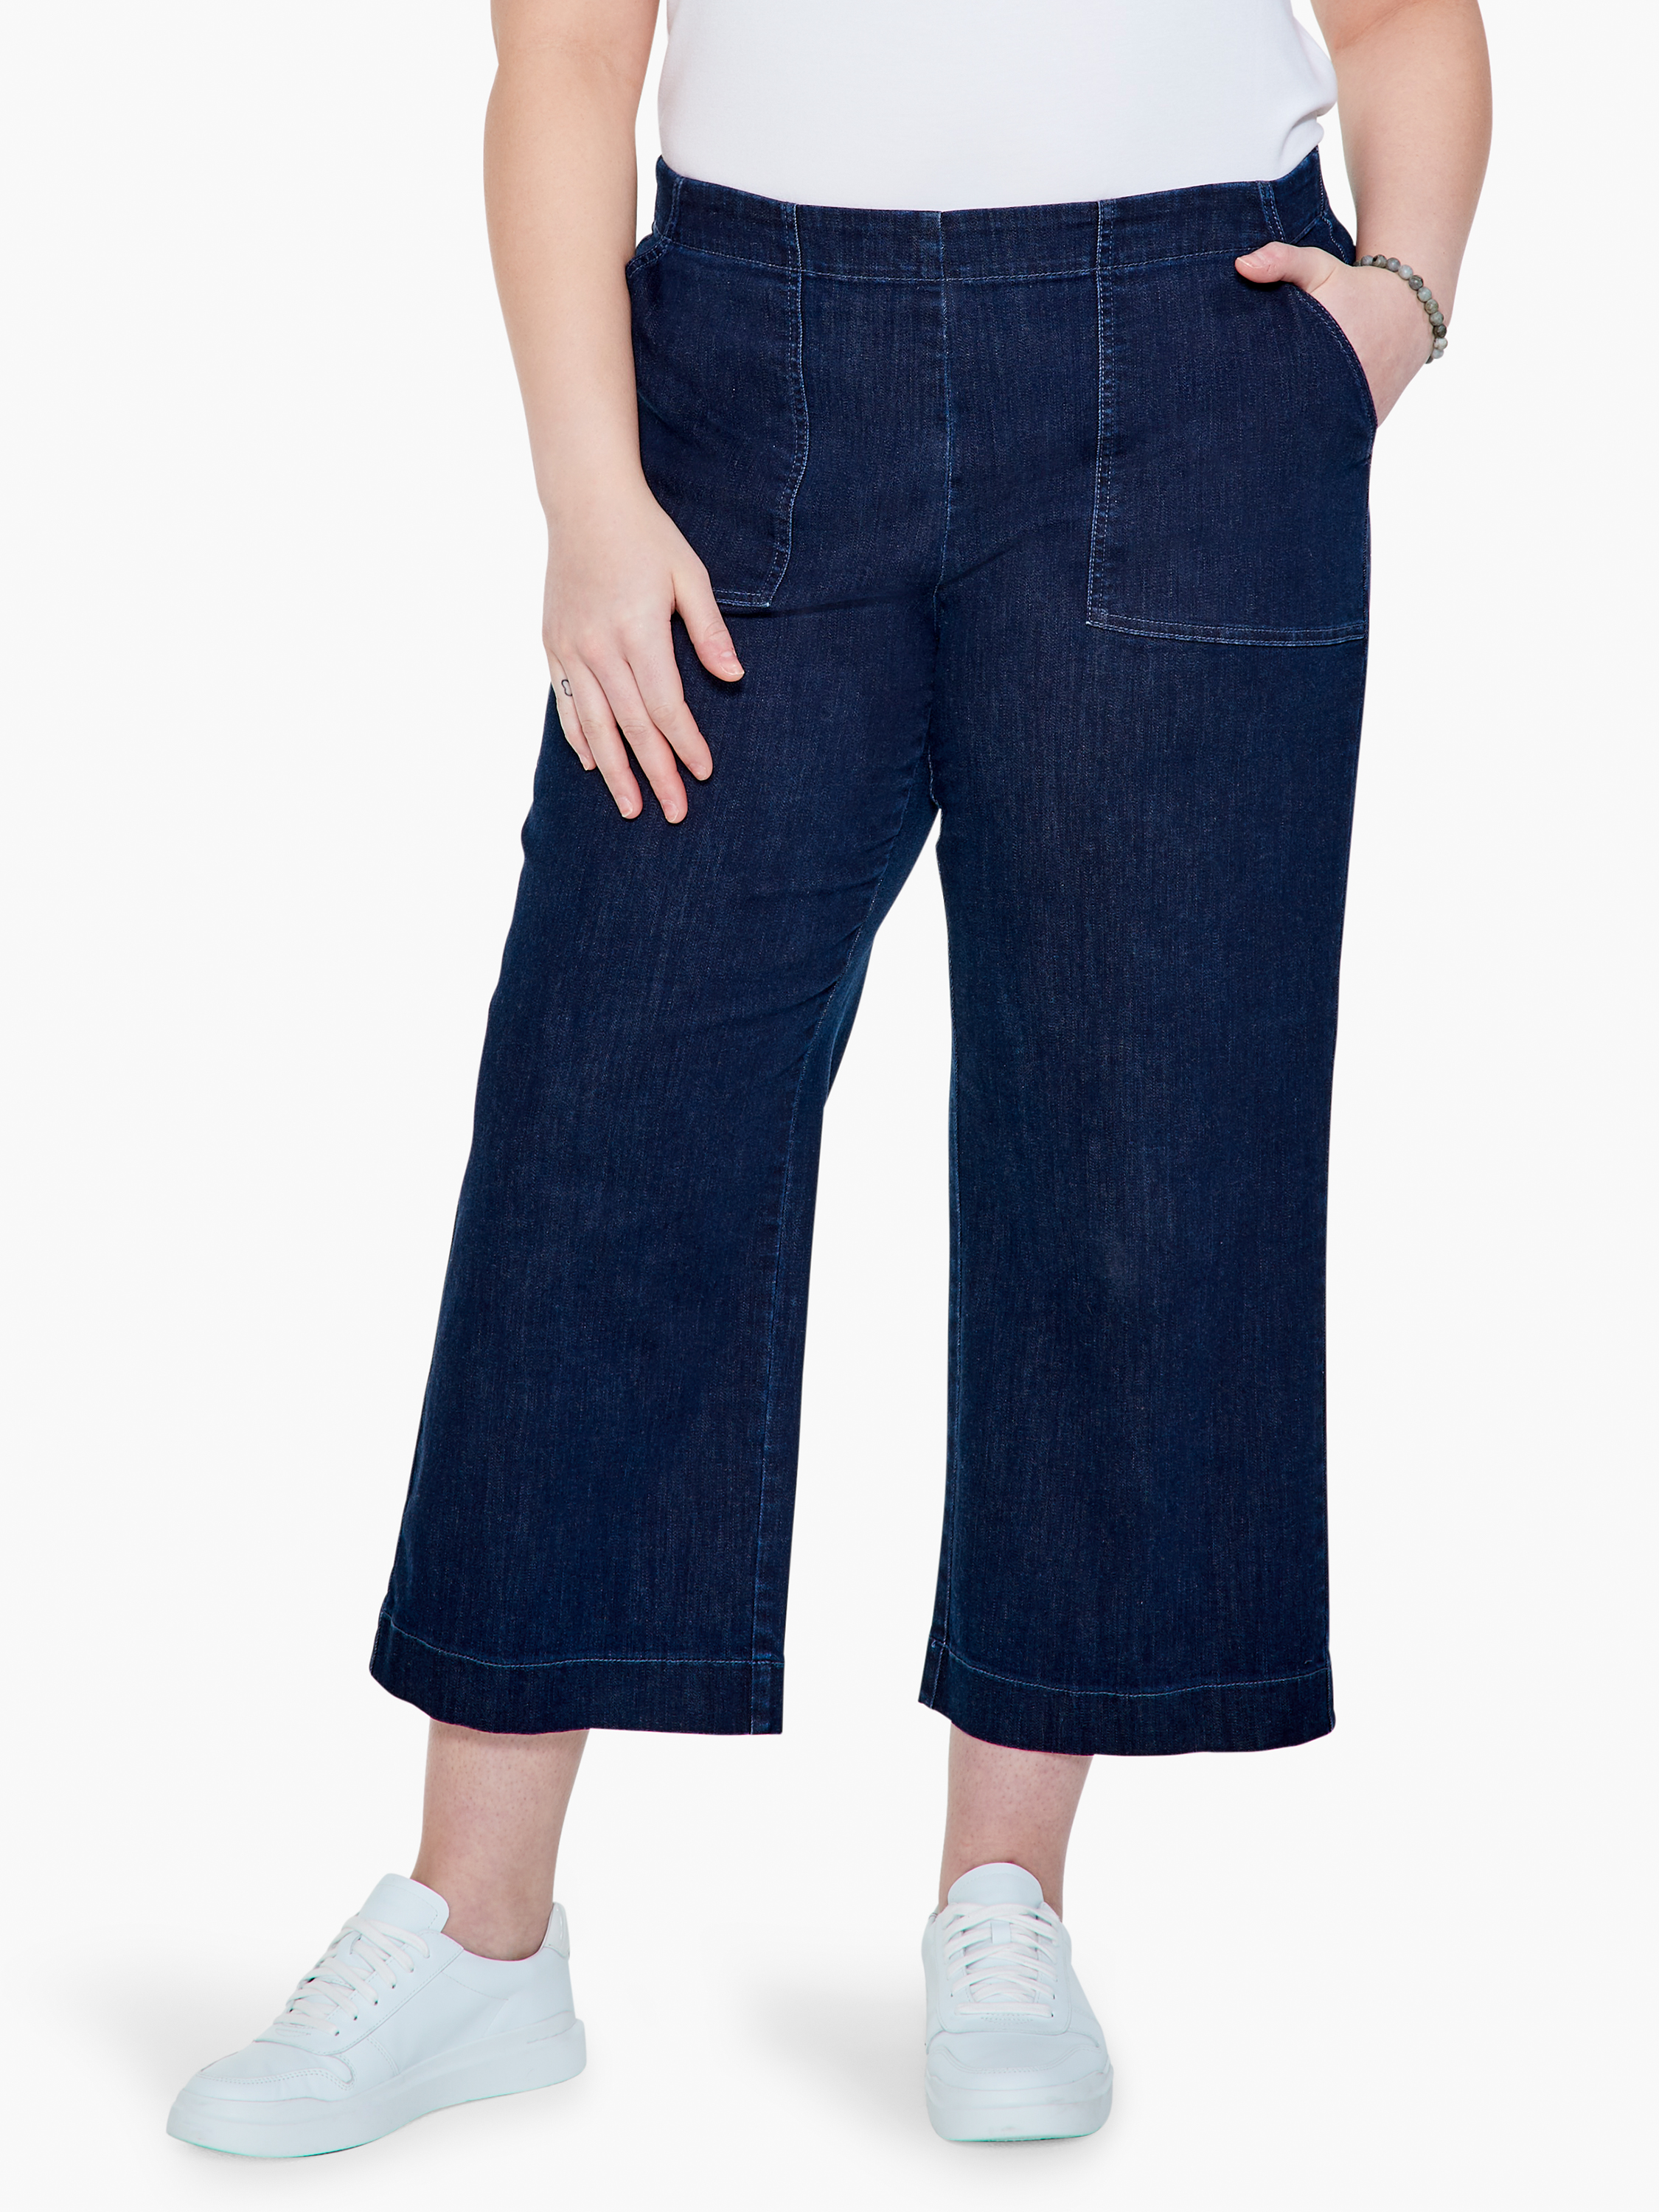 Women's Wide Leg Crop Pants - A New Day #55-8  Cropped denim pants,  Cropped pants, Wide leg crop pants